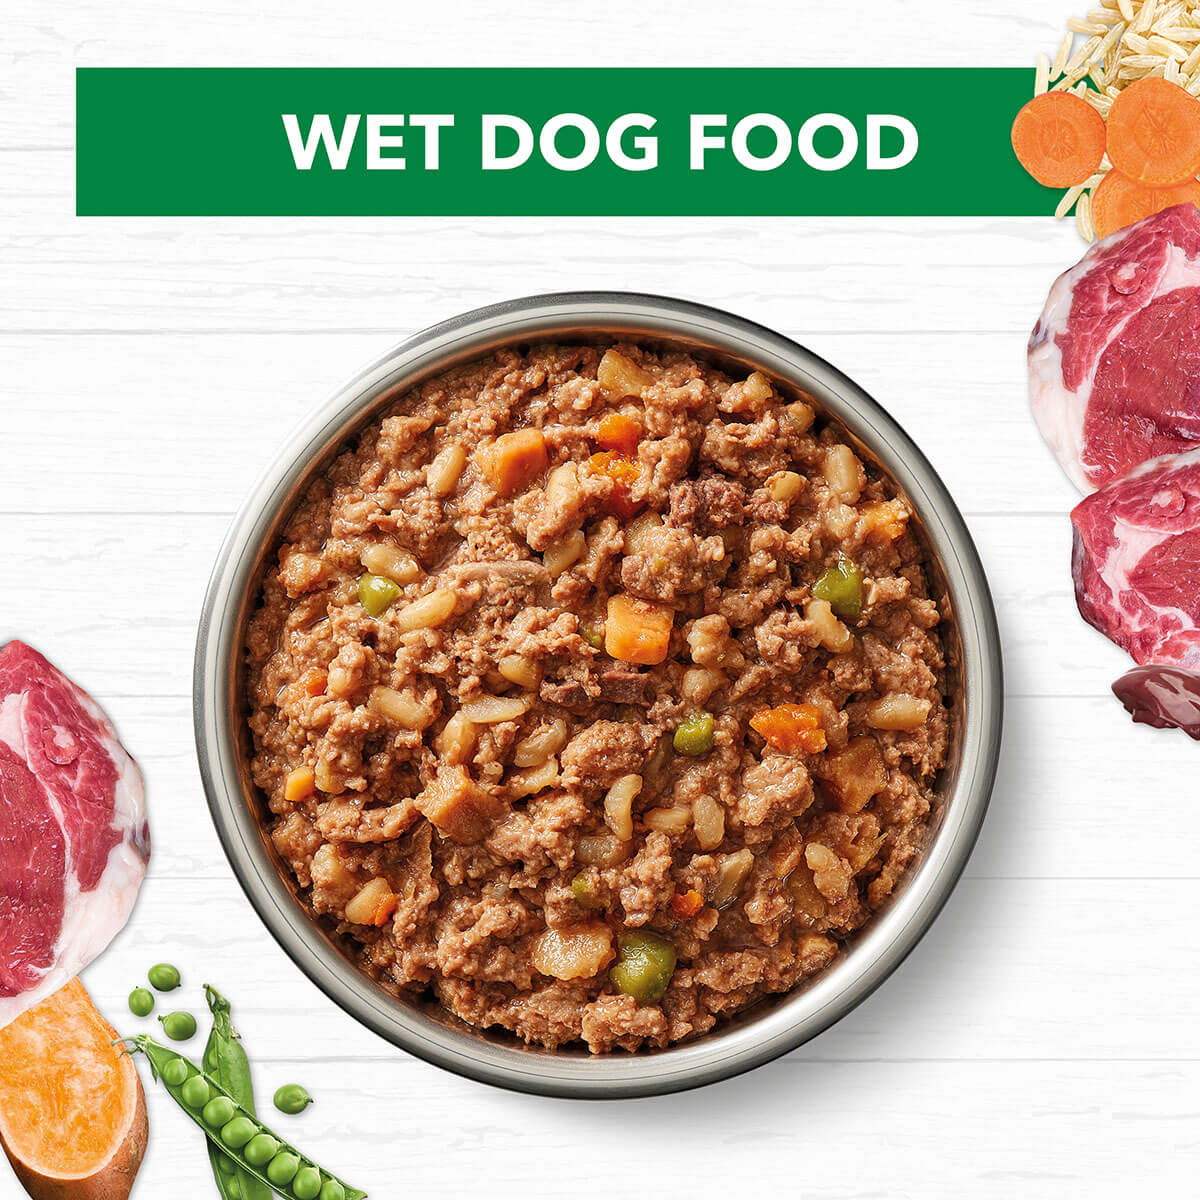 Ivory Coat Holistic Nutrition Adult Wet Dog Food Lamb & Brown Rice Loaf 400g